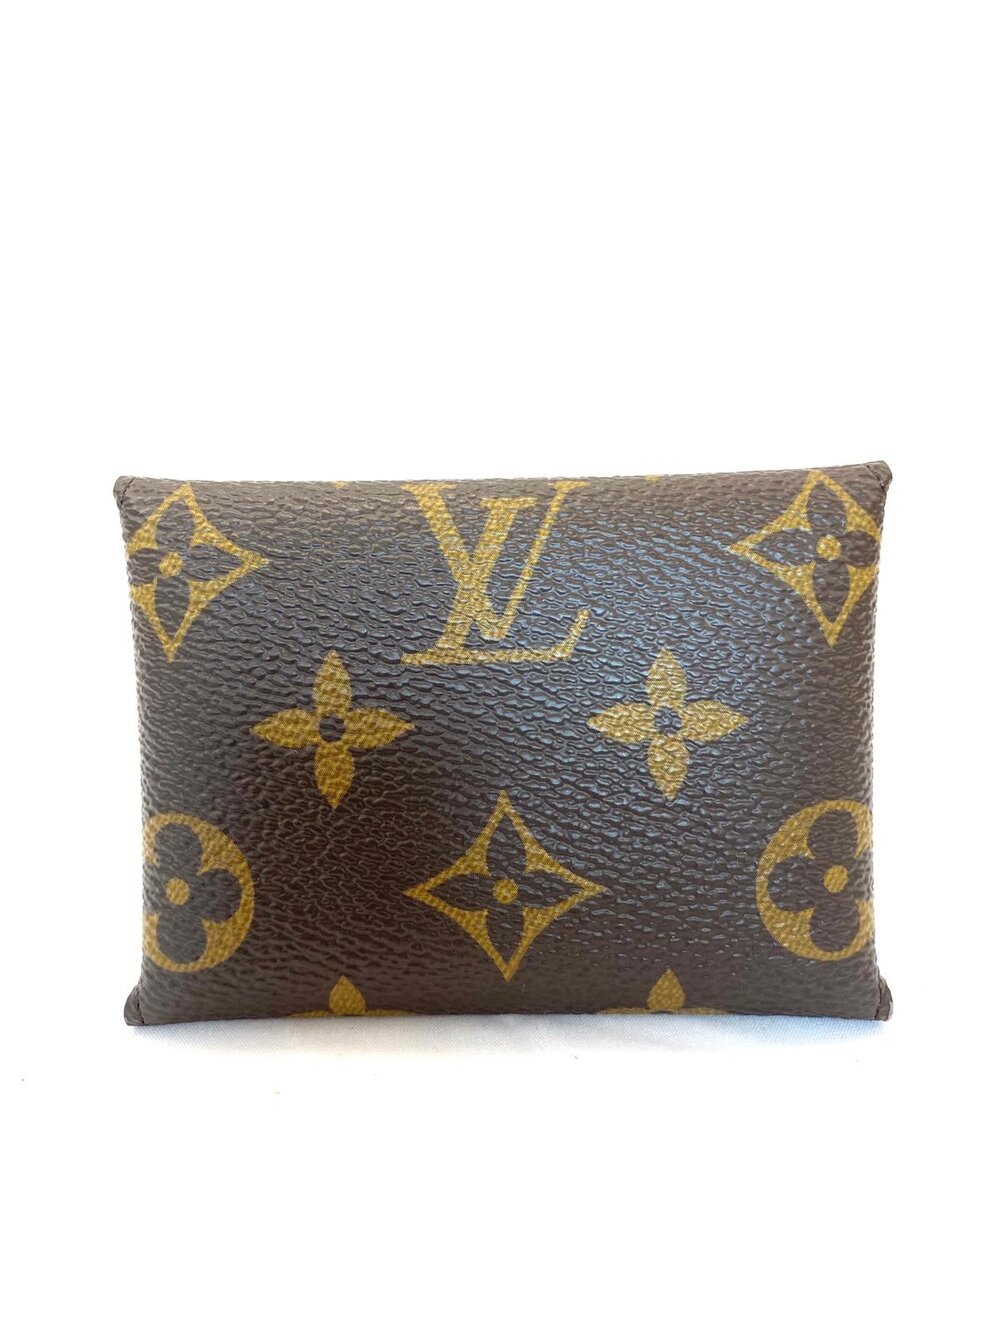 Louis Vuitton Pochette Insert Kirigami Monogram Small